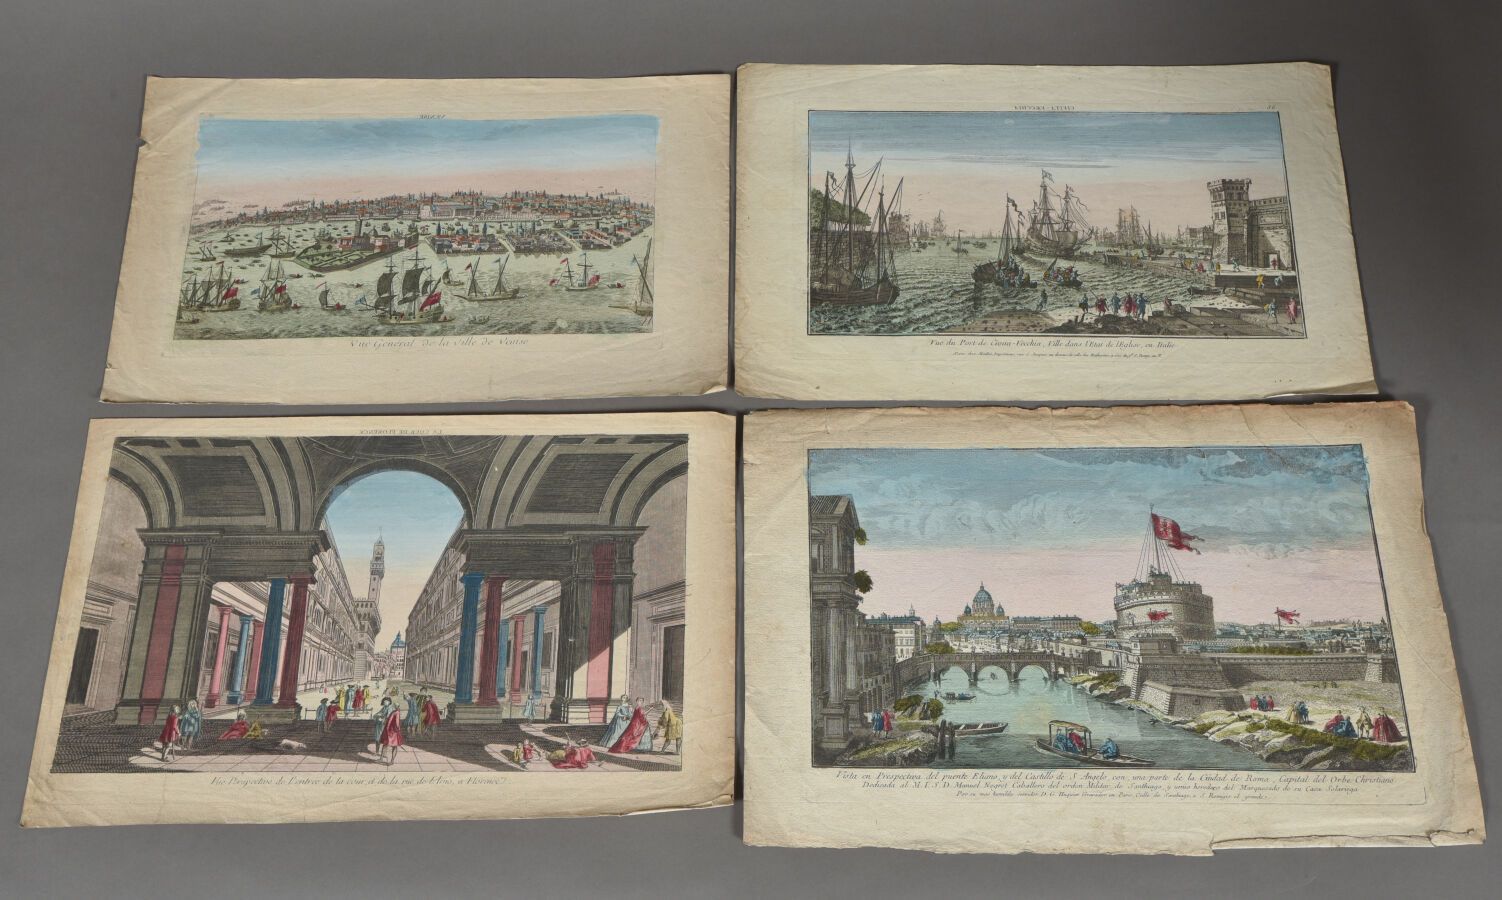 Null Popular imagery of the 18th century. 
Venice 
Civitavecchia 
Rome
Castel Sa&hellip;